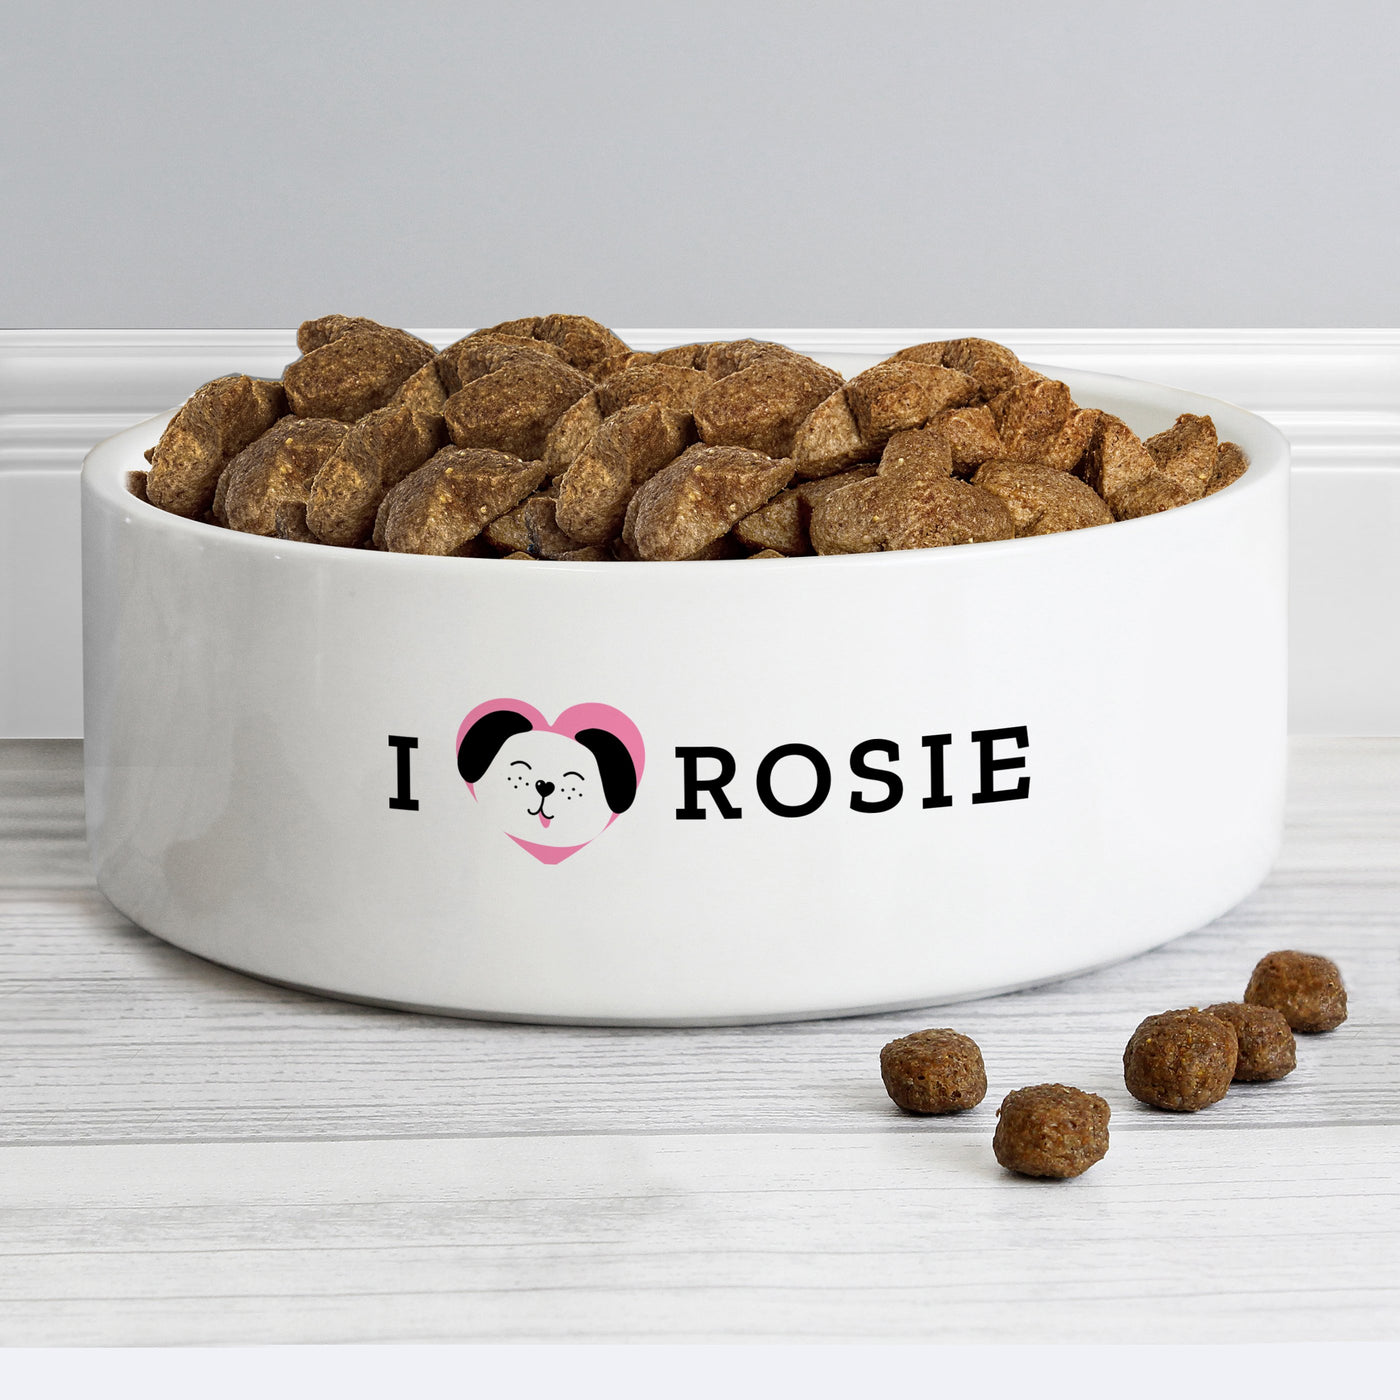 Personalised I Love my Dog - Cute Design 14cm Medium Ceramic White Pet Bowl - Shop Personalised Gifts